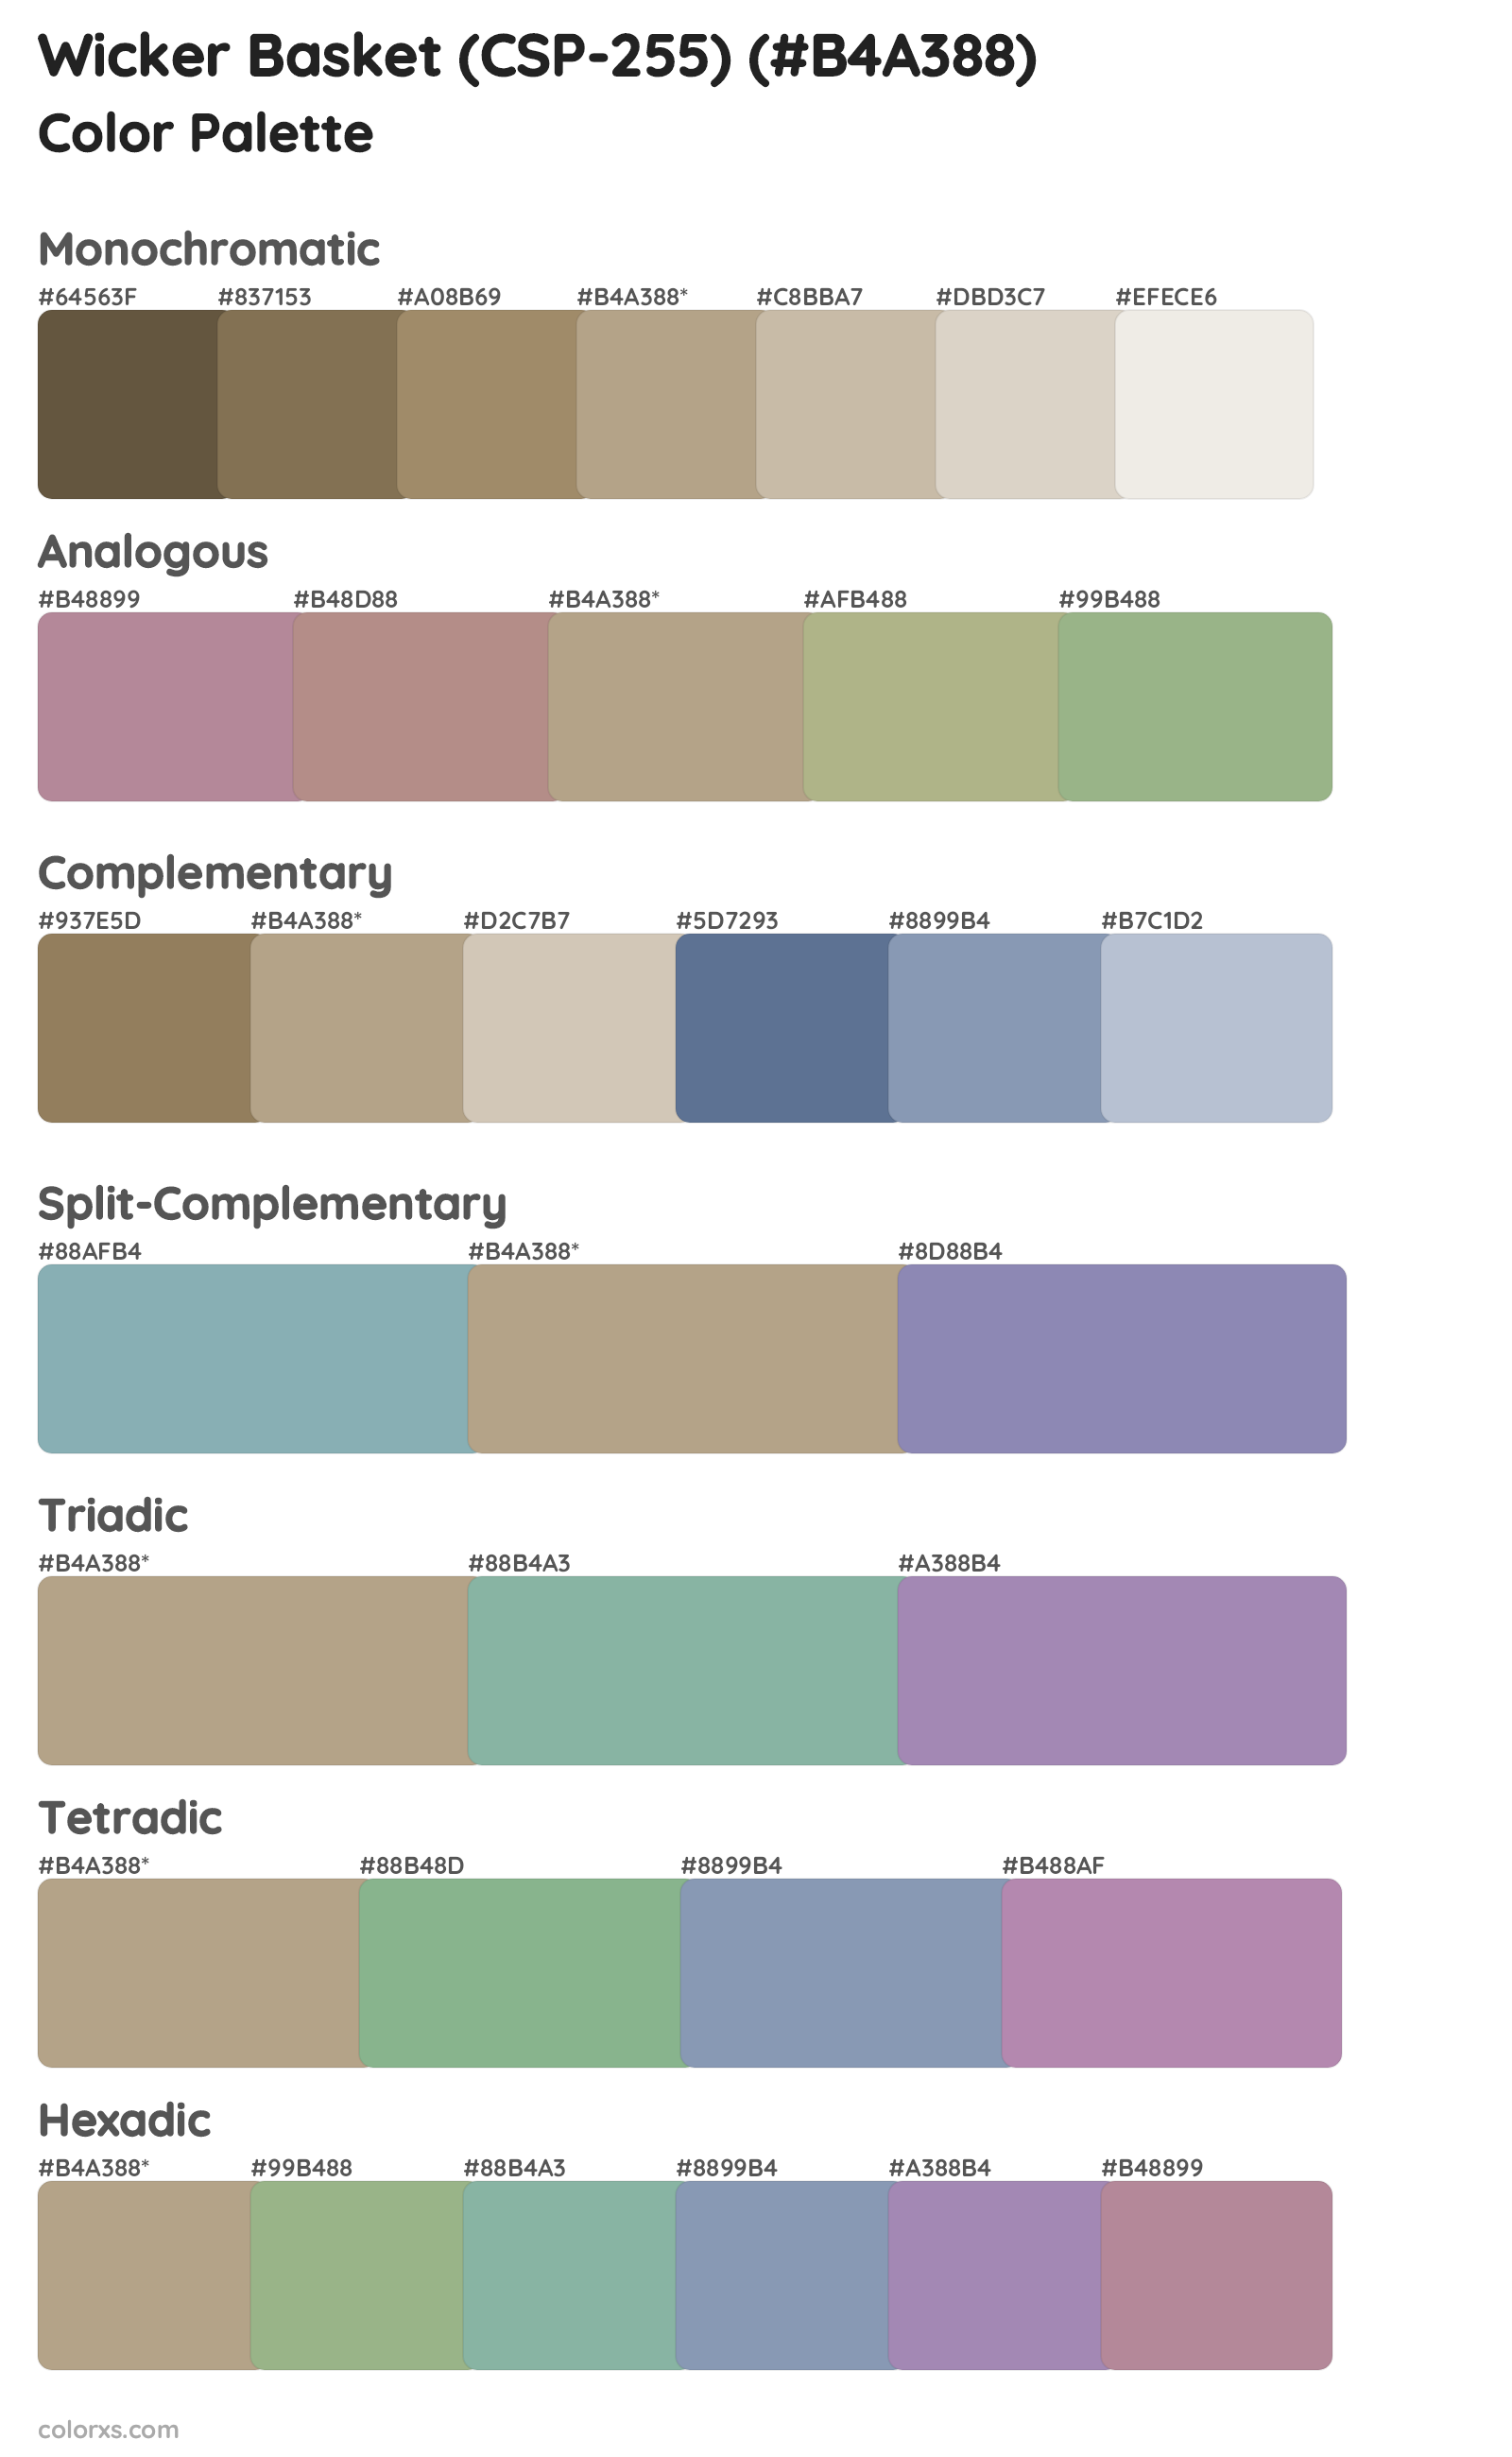 Wicker Basket (CSP-255) Color Scheme Palettes